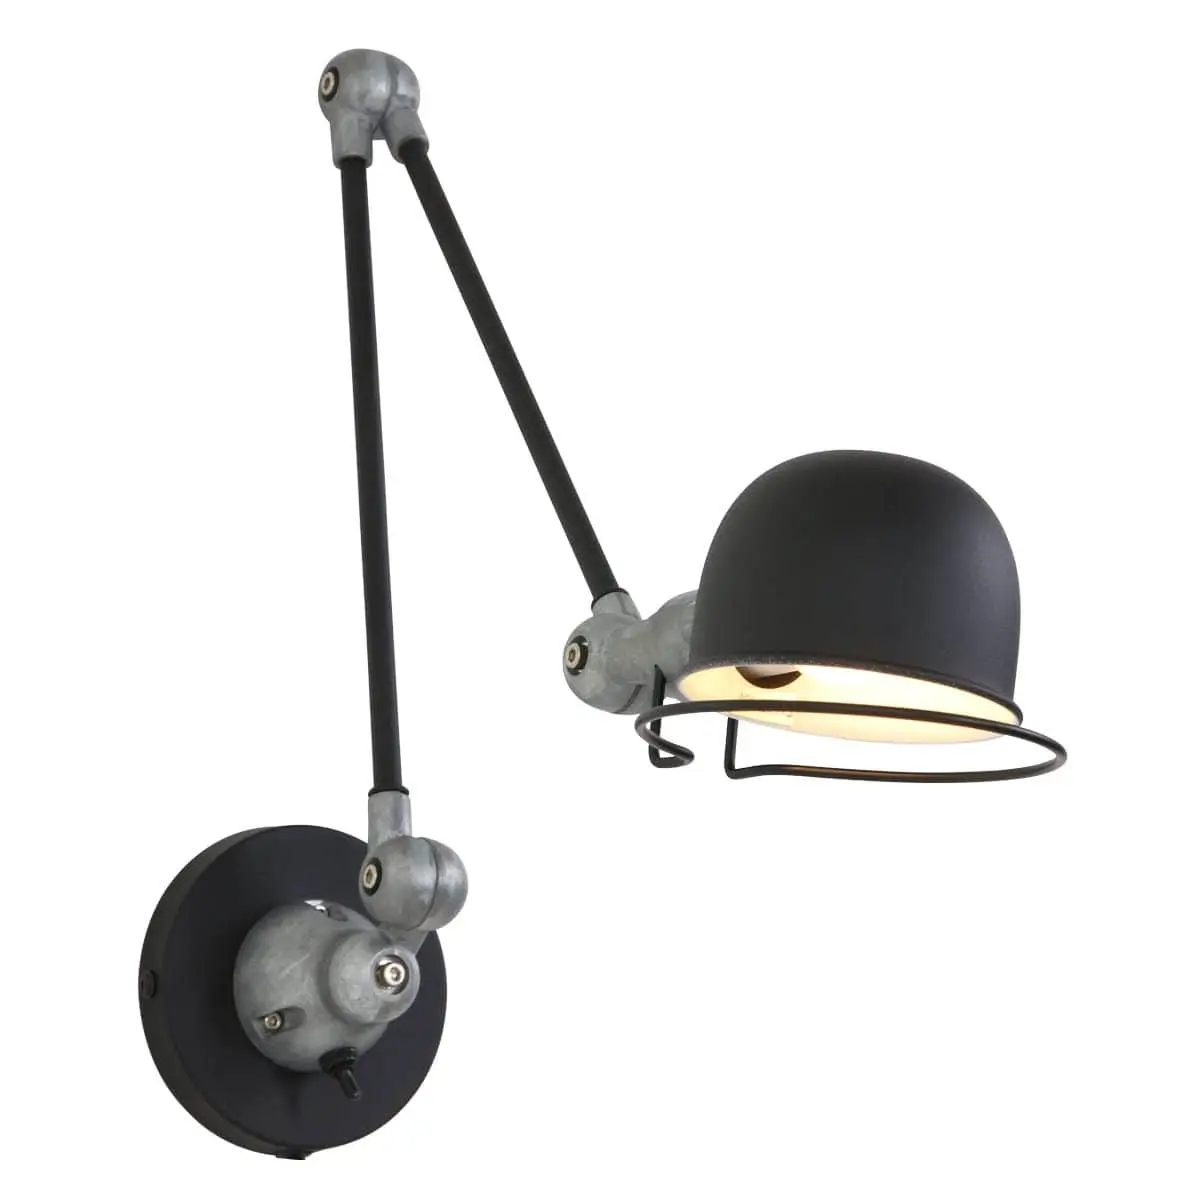 Wandlampee im industrial Vintage Factory Stil, der Designklassiker unter den schwarzen Wandlampen